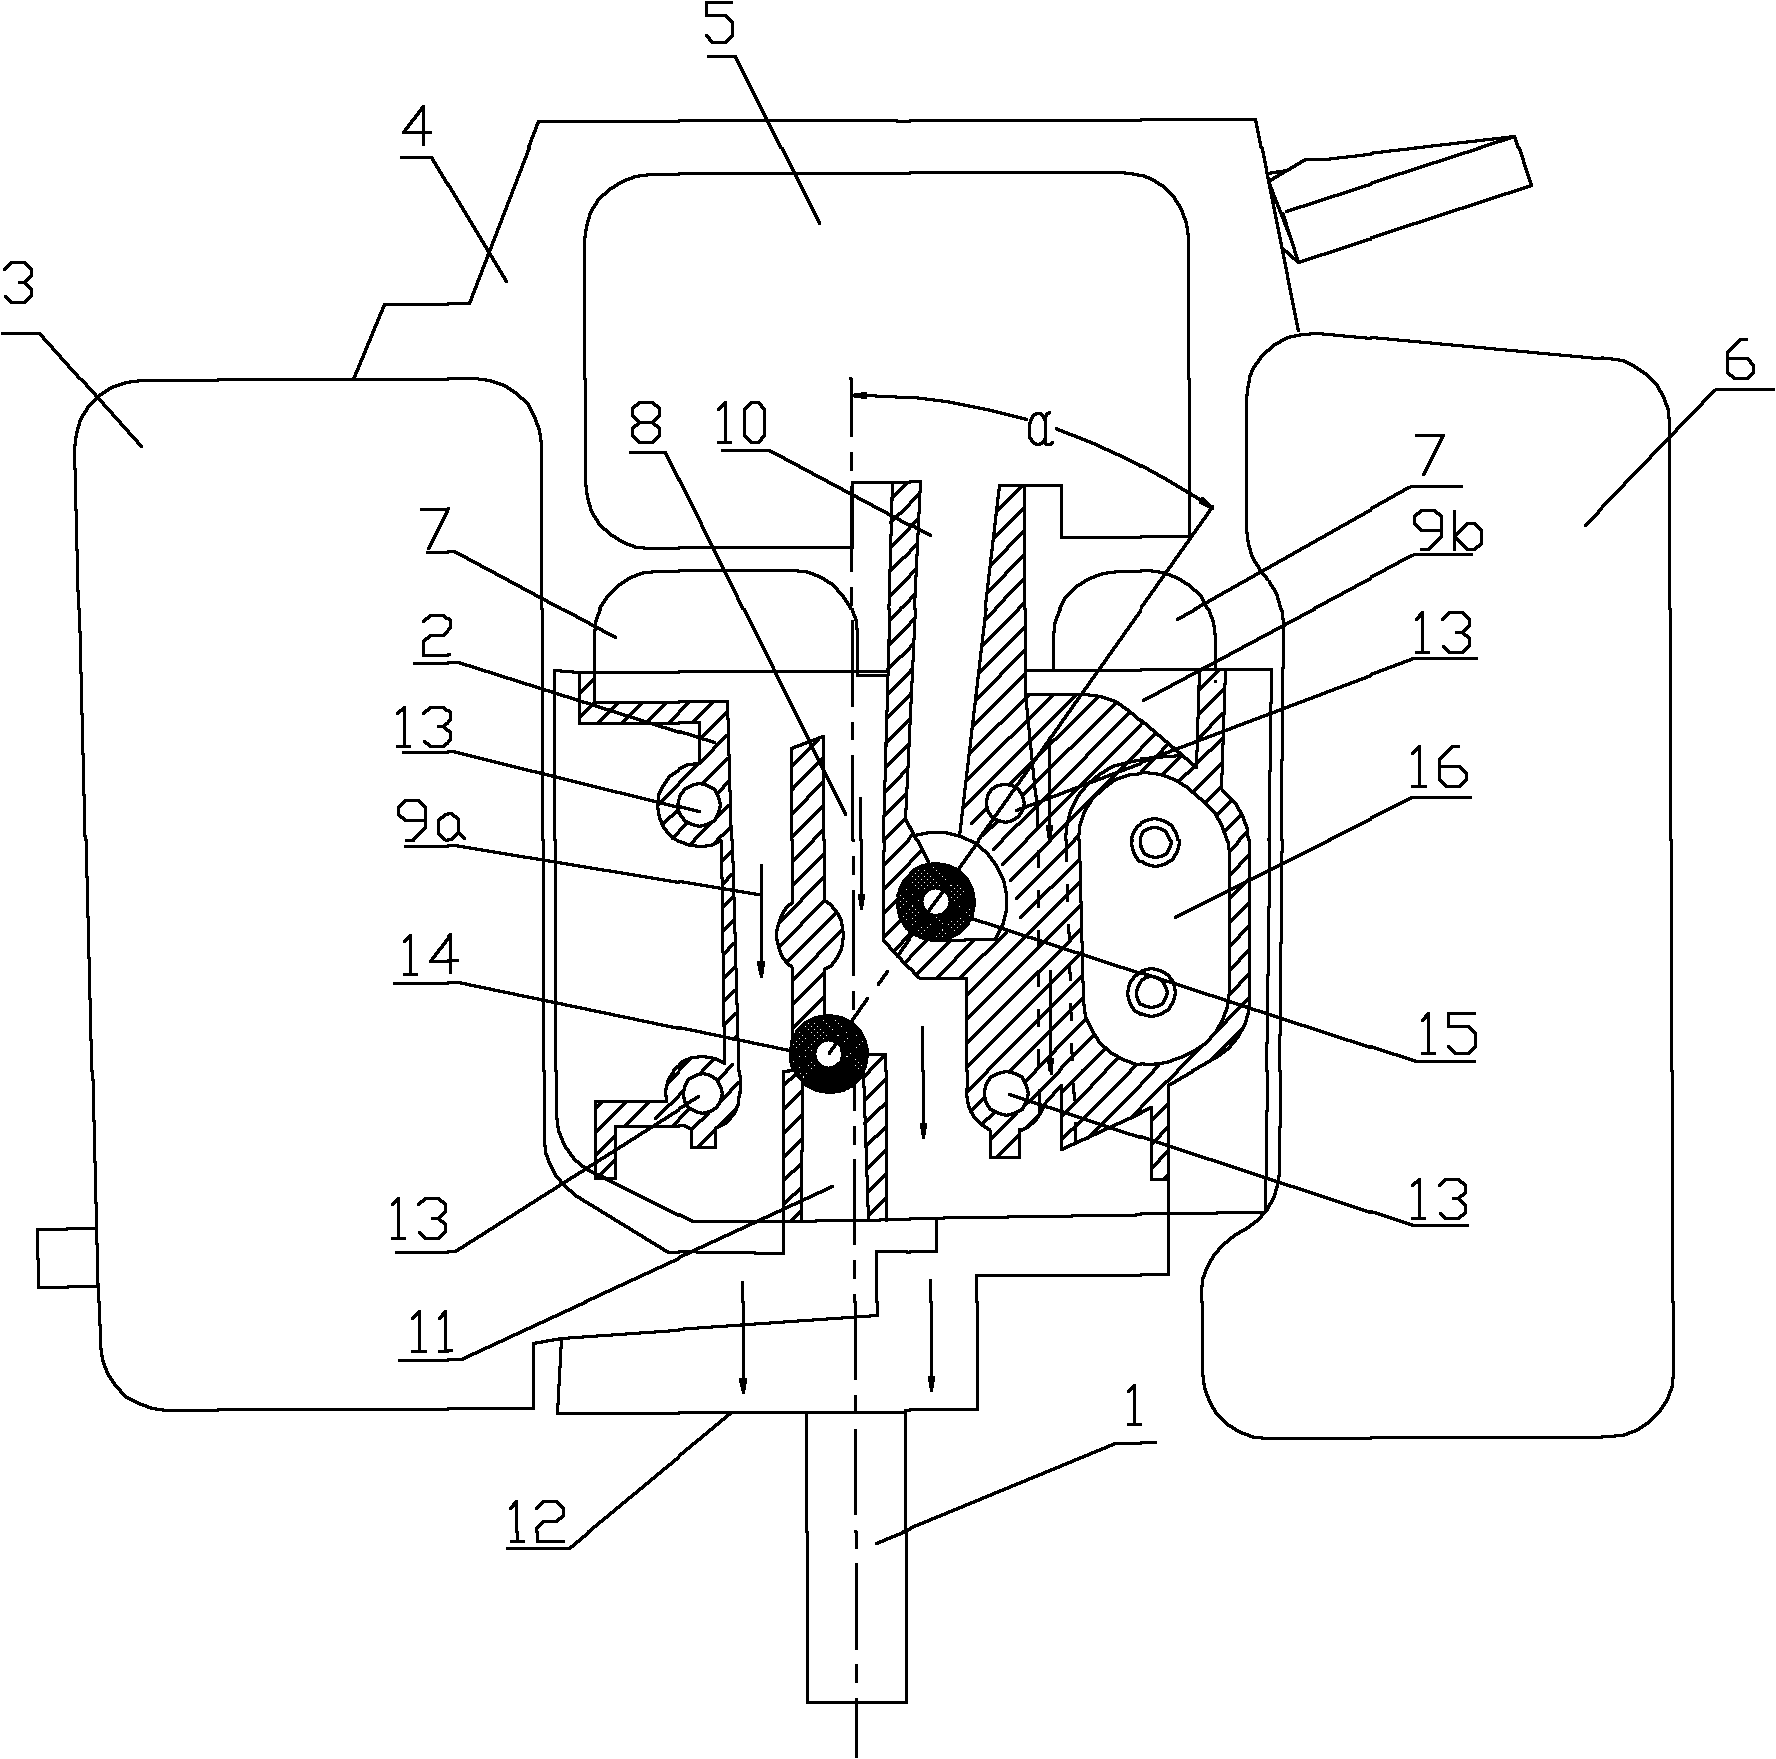 Valve arrangement structure for cylinder head of air-cooled diesel engine